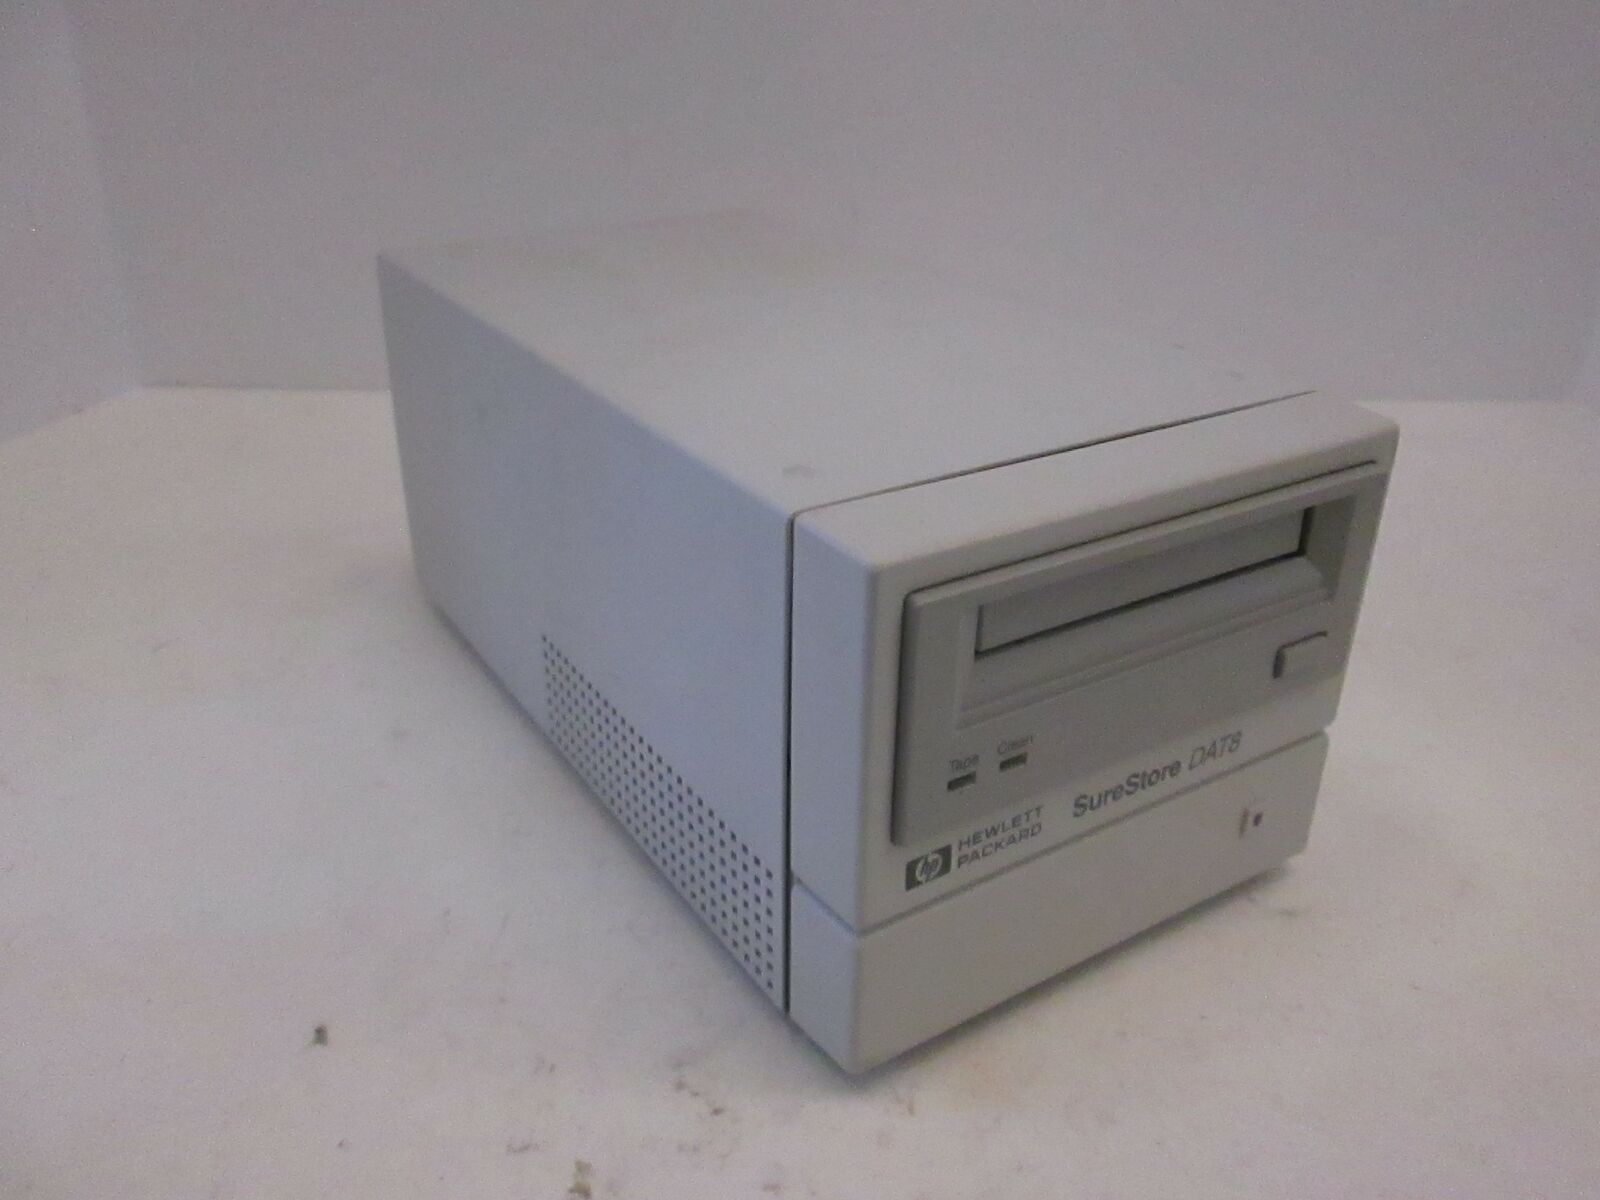 Hewlett Packard, External SCSI Tape Drive, SureStore DAT8, Used